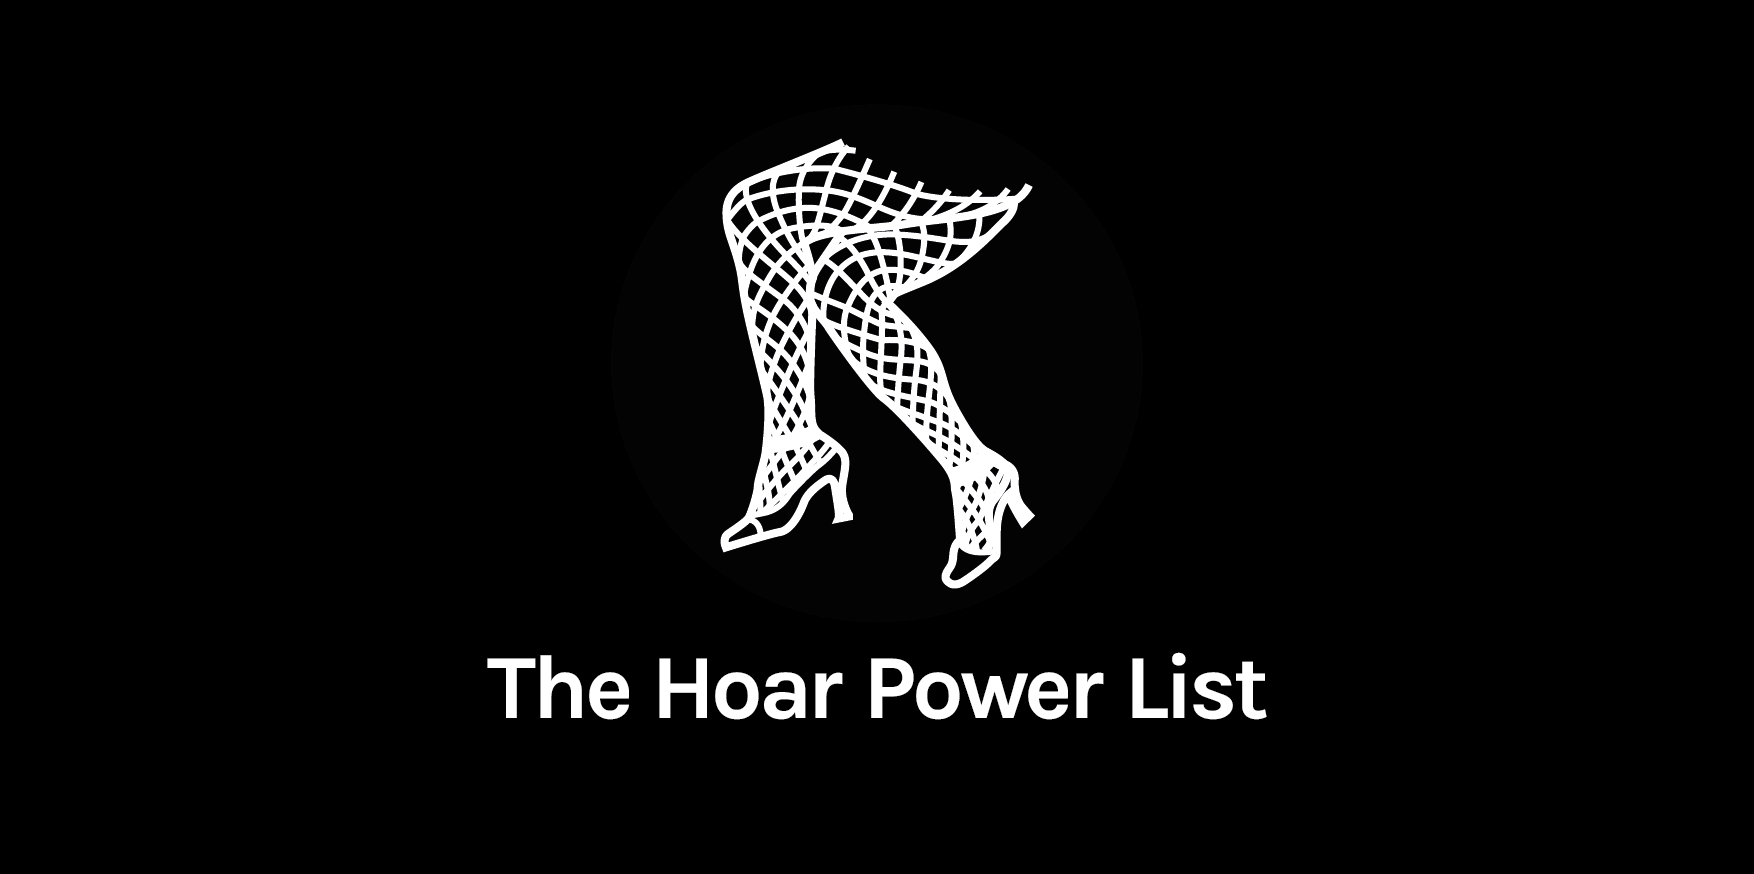 Introducing The Hoar Power List